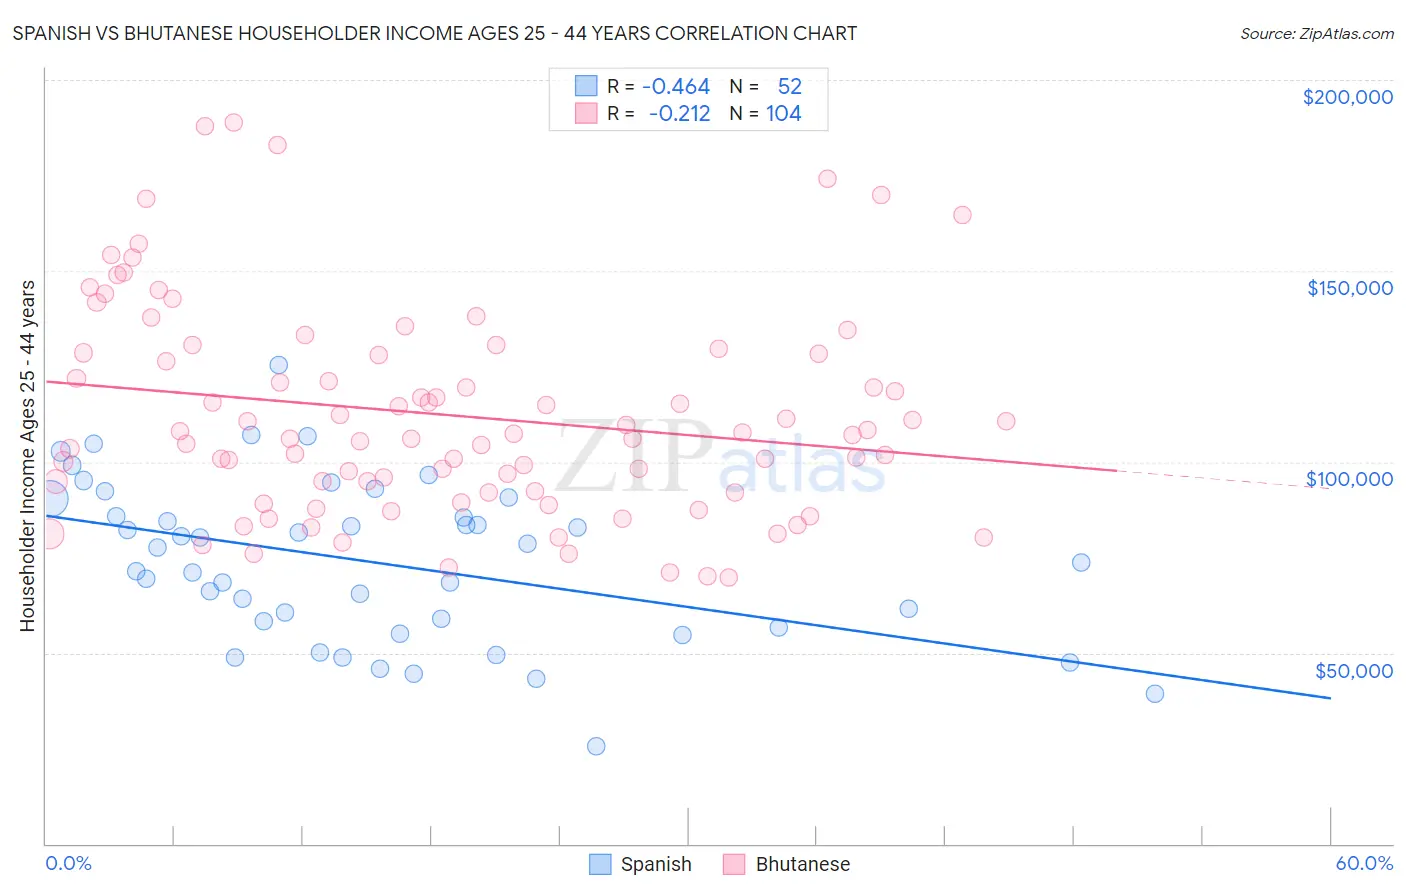 Spanish vs Bhutanese Householder Income Ages 25 - 44 years